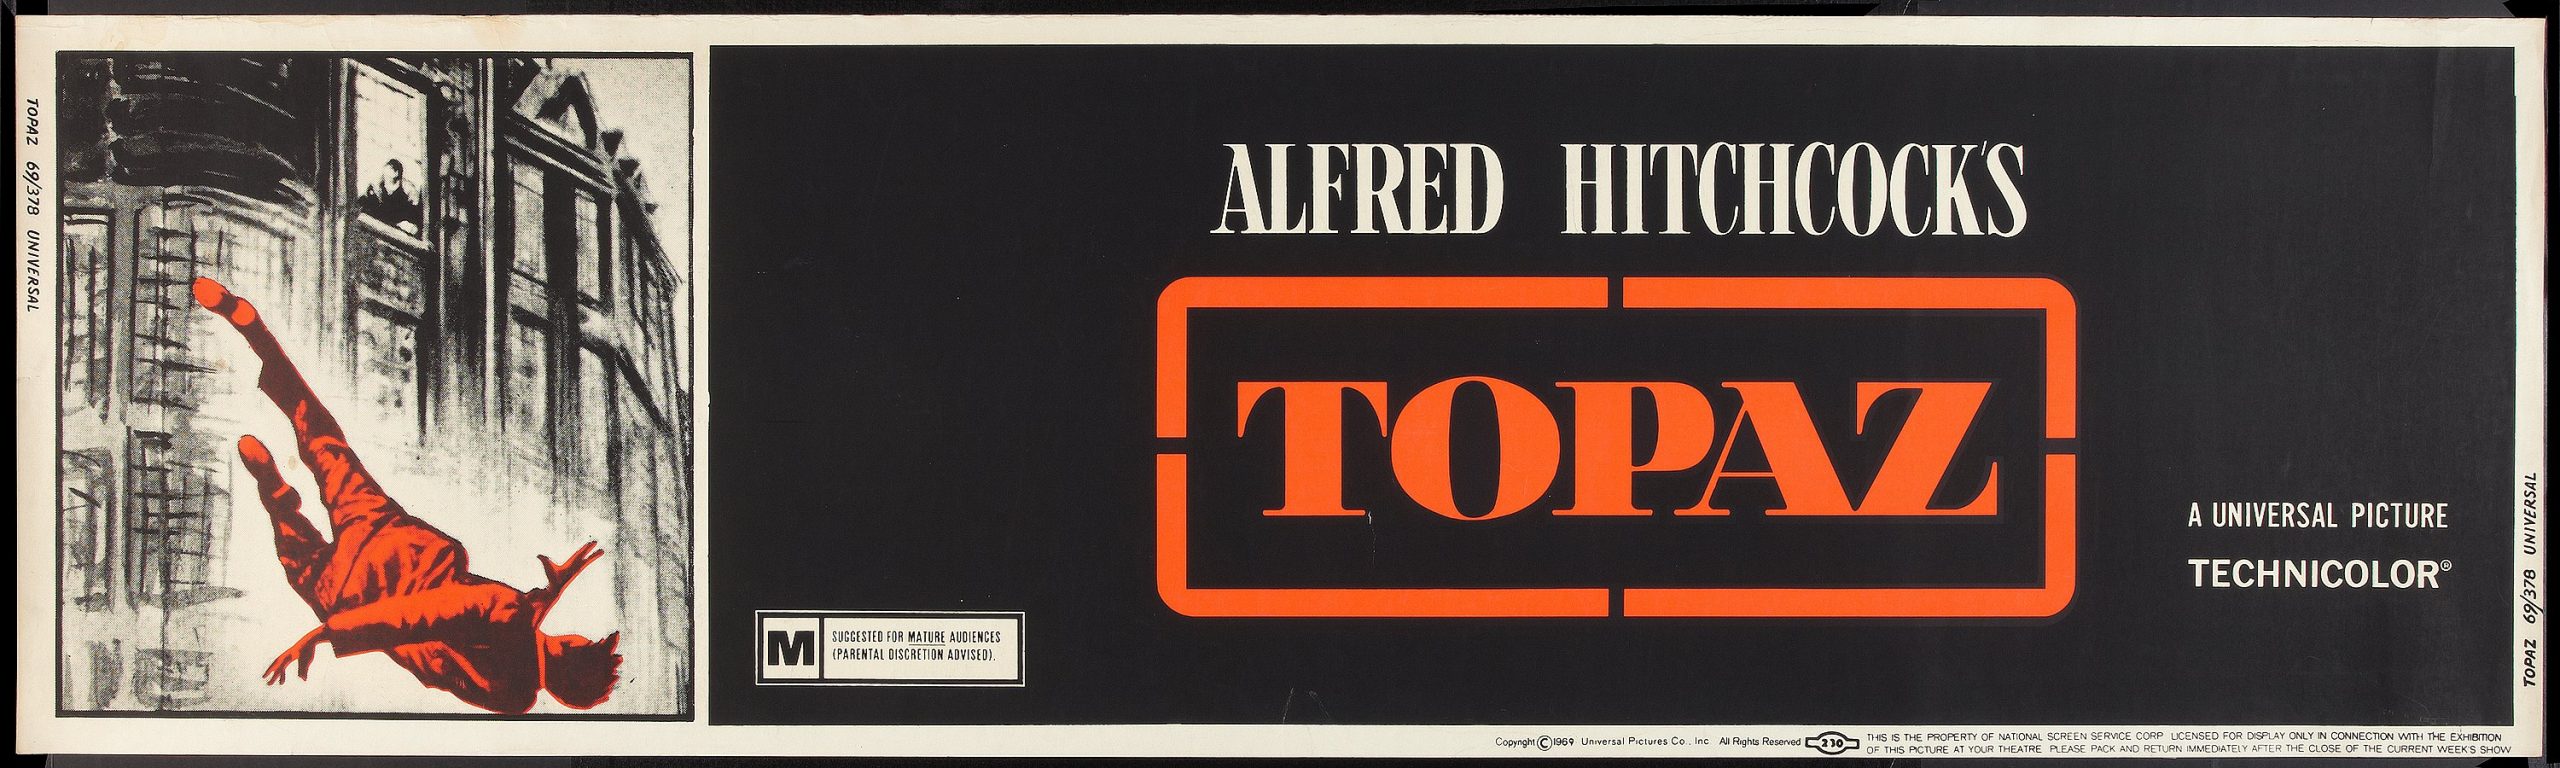 Topaz (1969, dir. Alfred Hitchcock) US banner poster